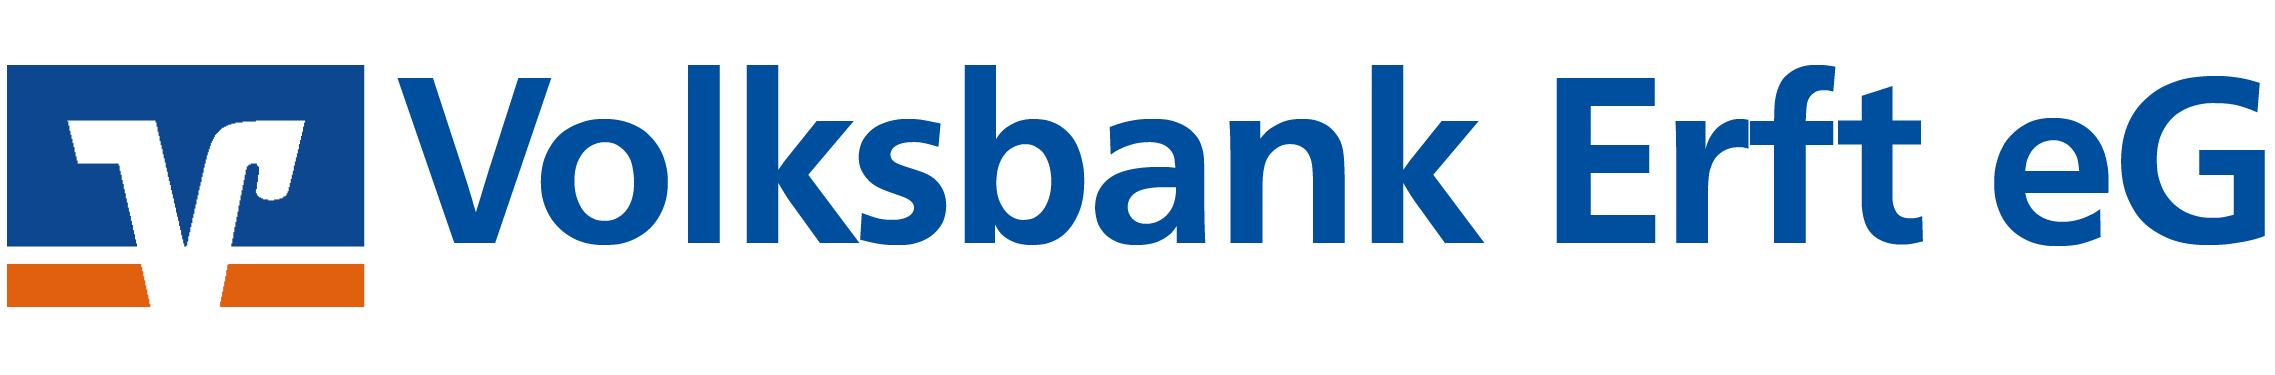 Volksbank Erft eG Logo